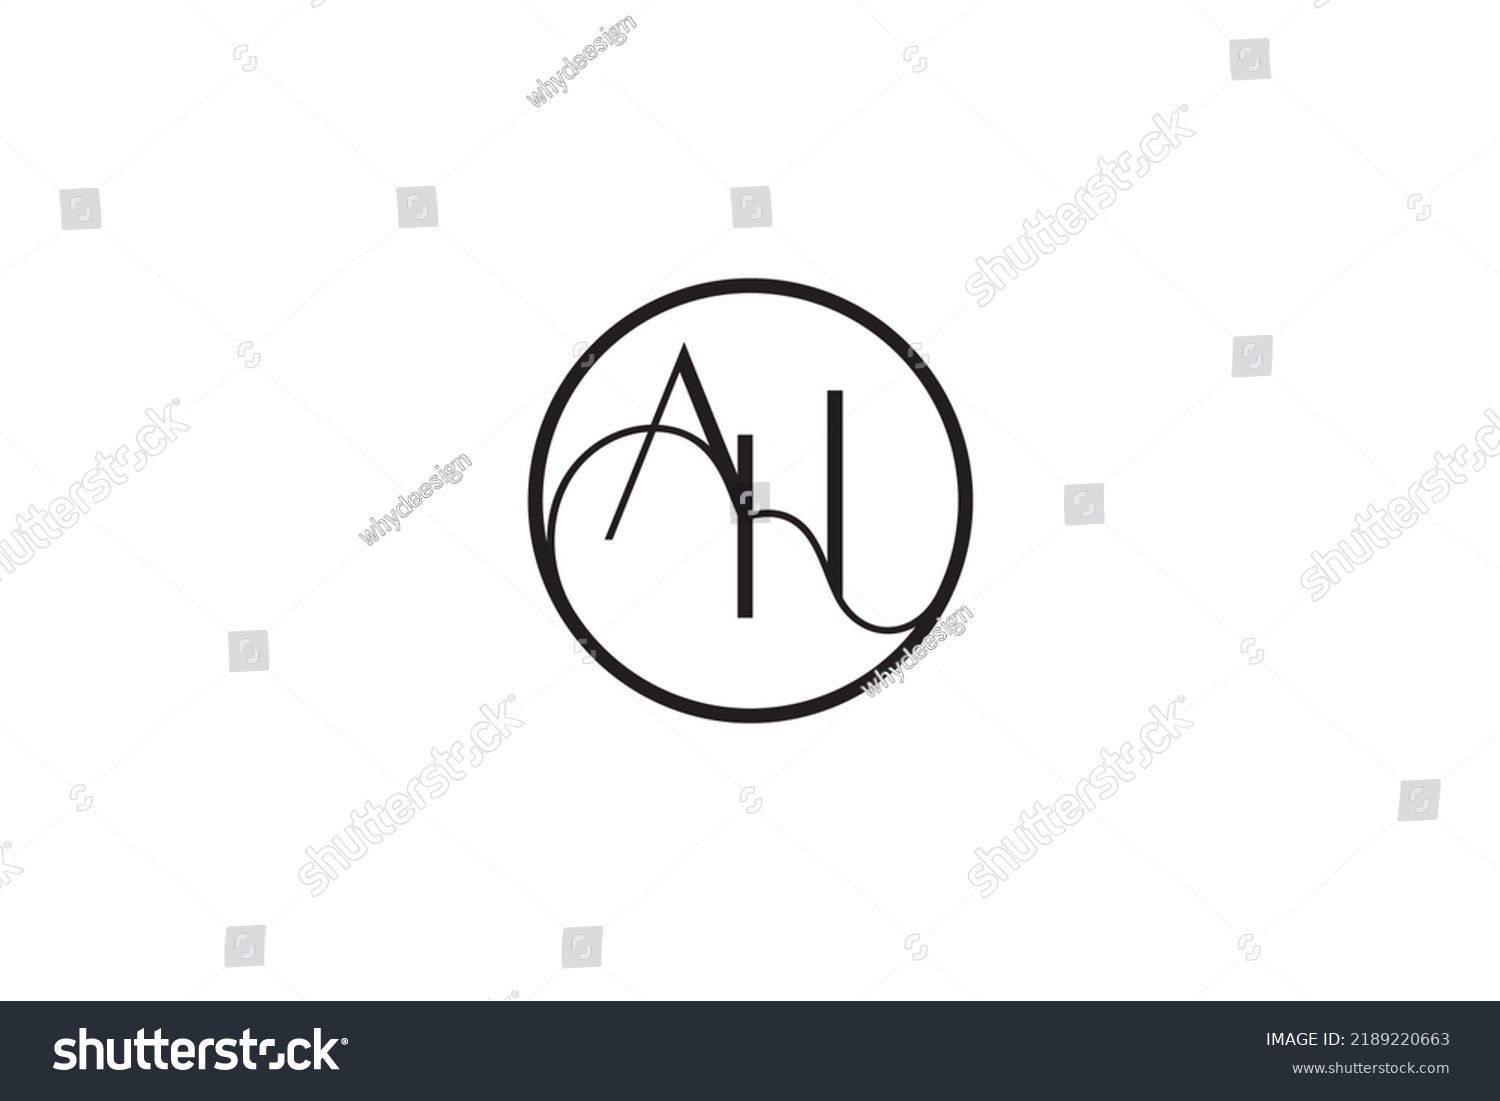 SVG of A, H, AH black handwritten monogram logo vector in circle frame svg